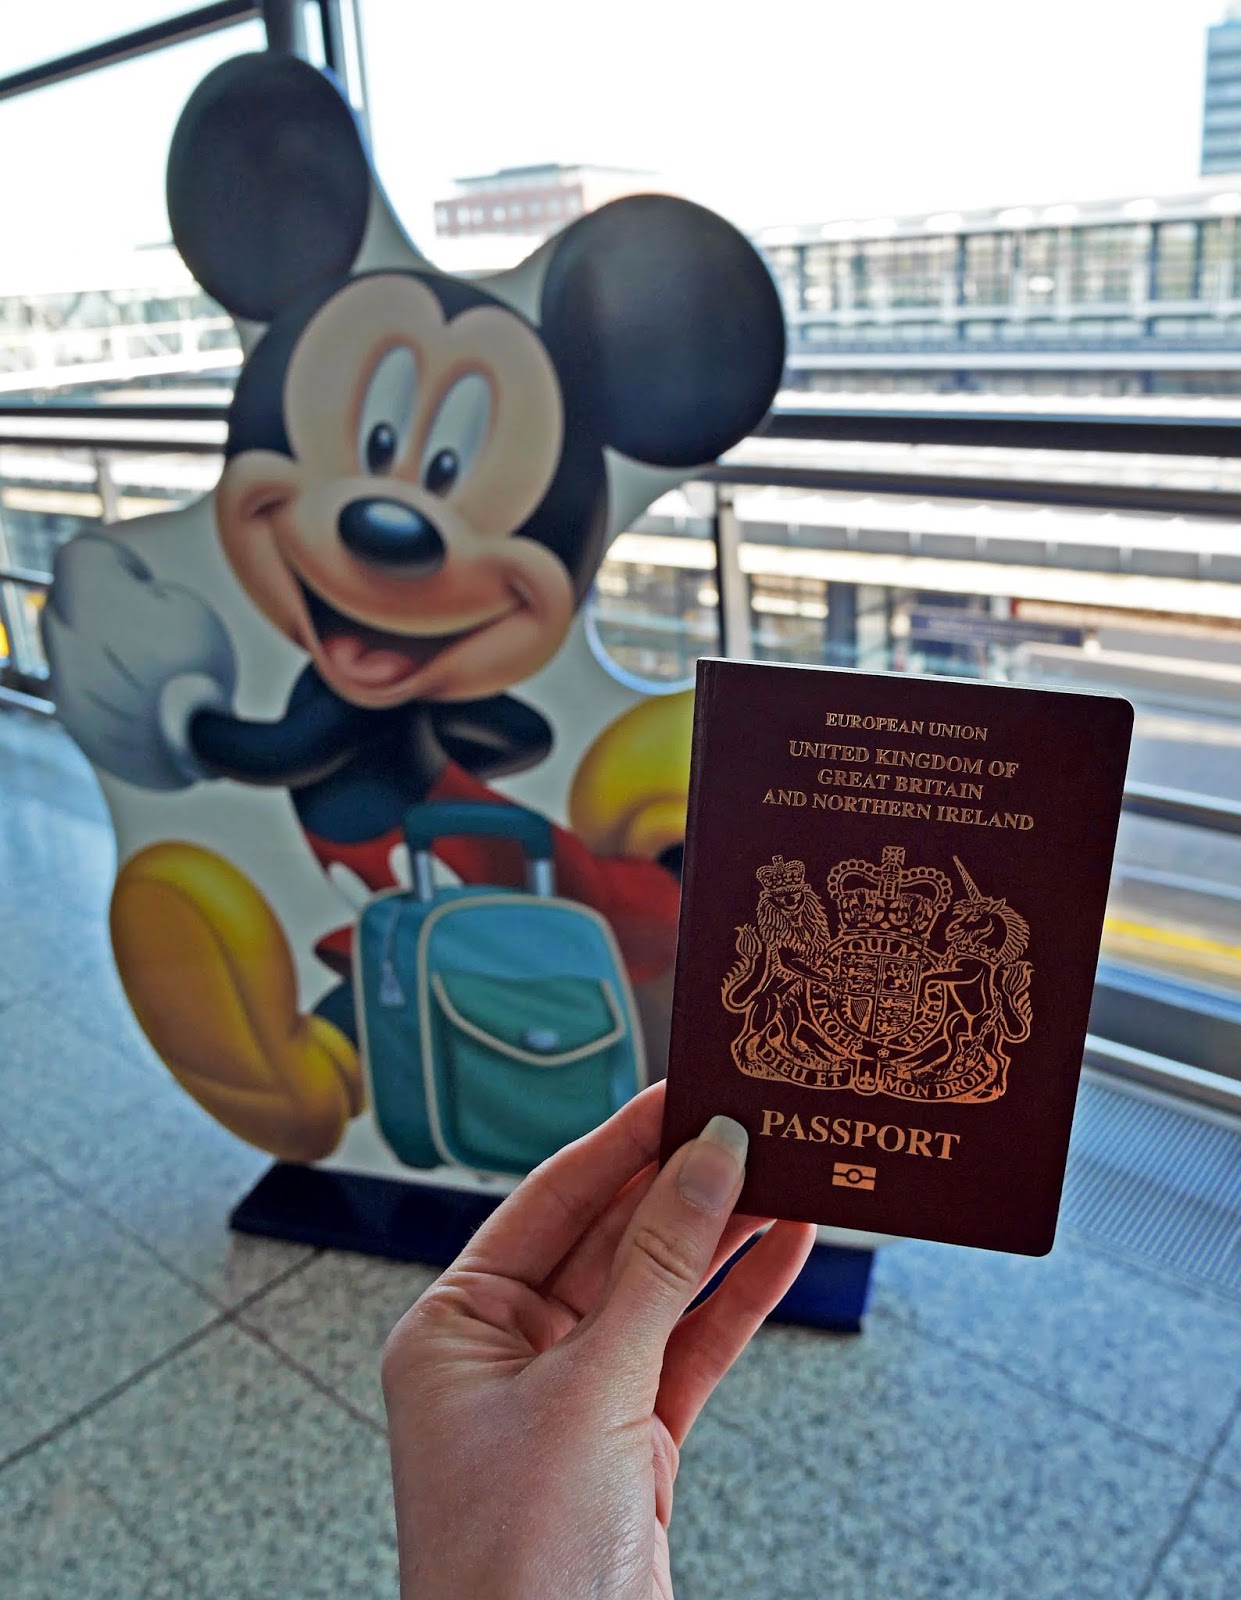 Taking the Eurostar to Disneyland Paris from Ashford International